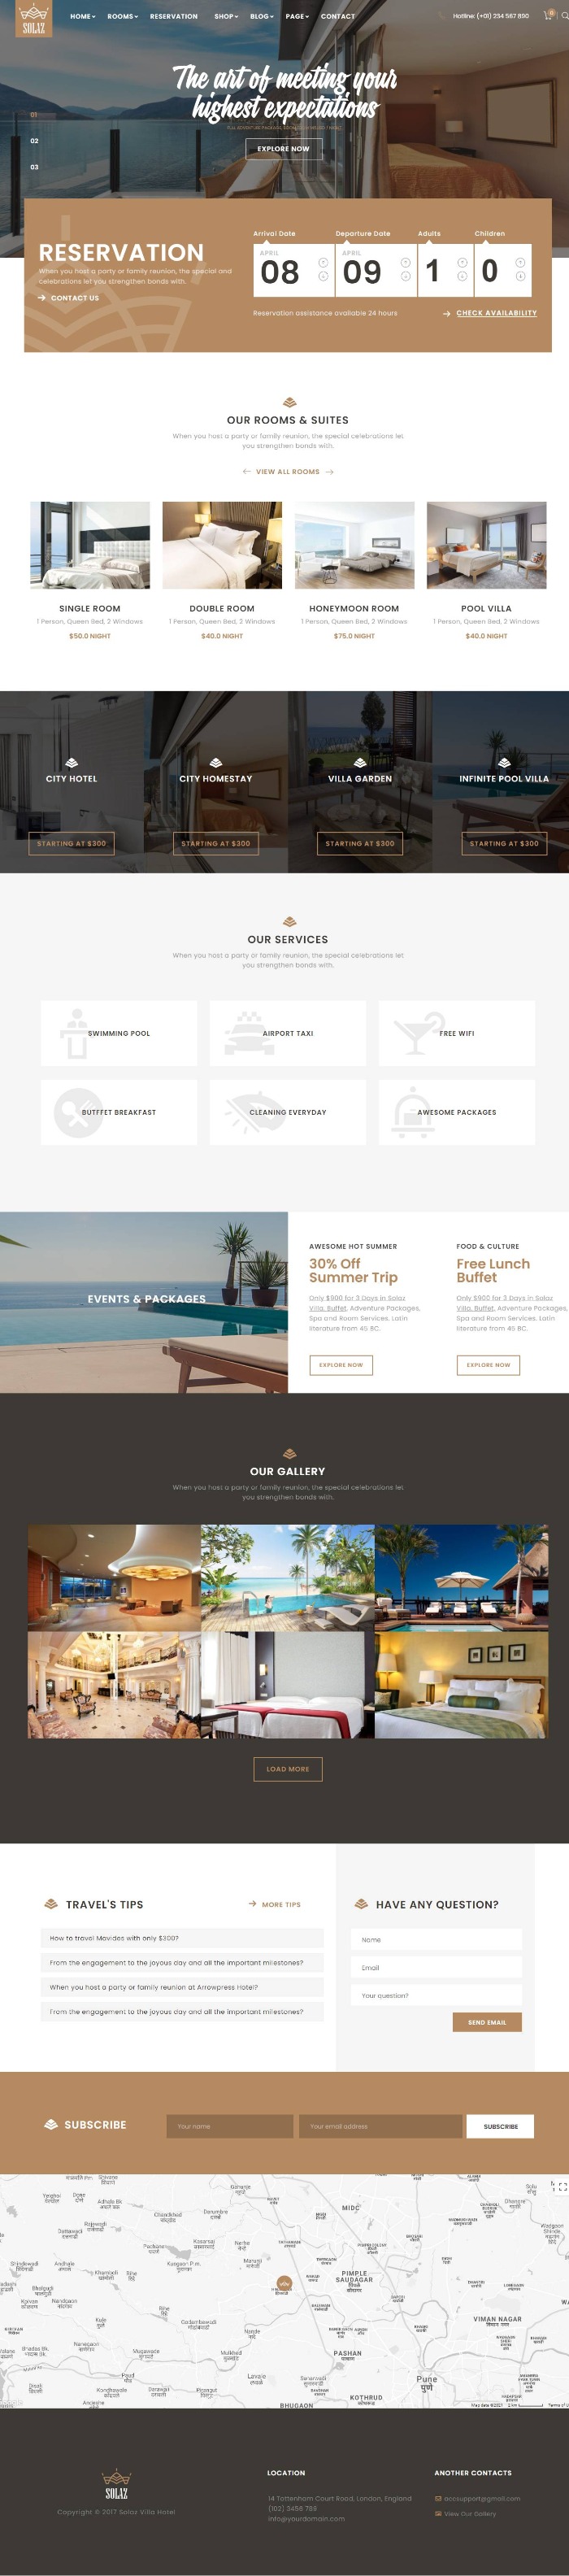 Mẫu Website Khách Sạn - Solaz 2